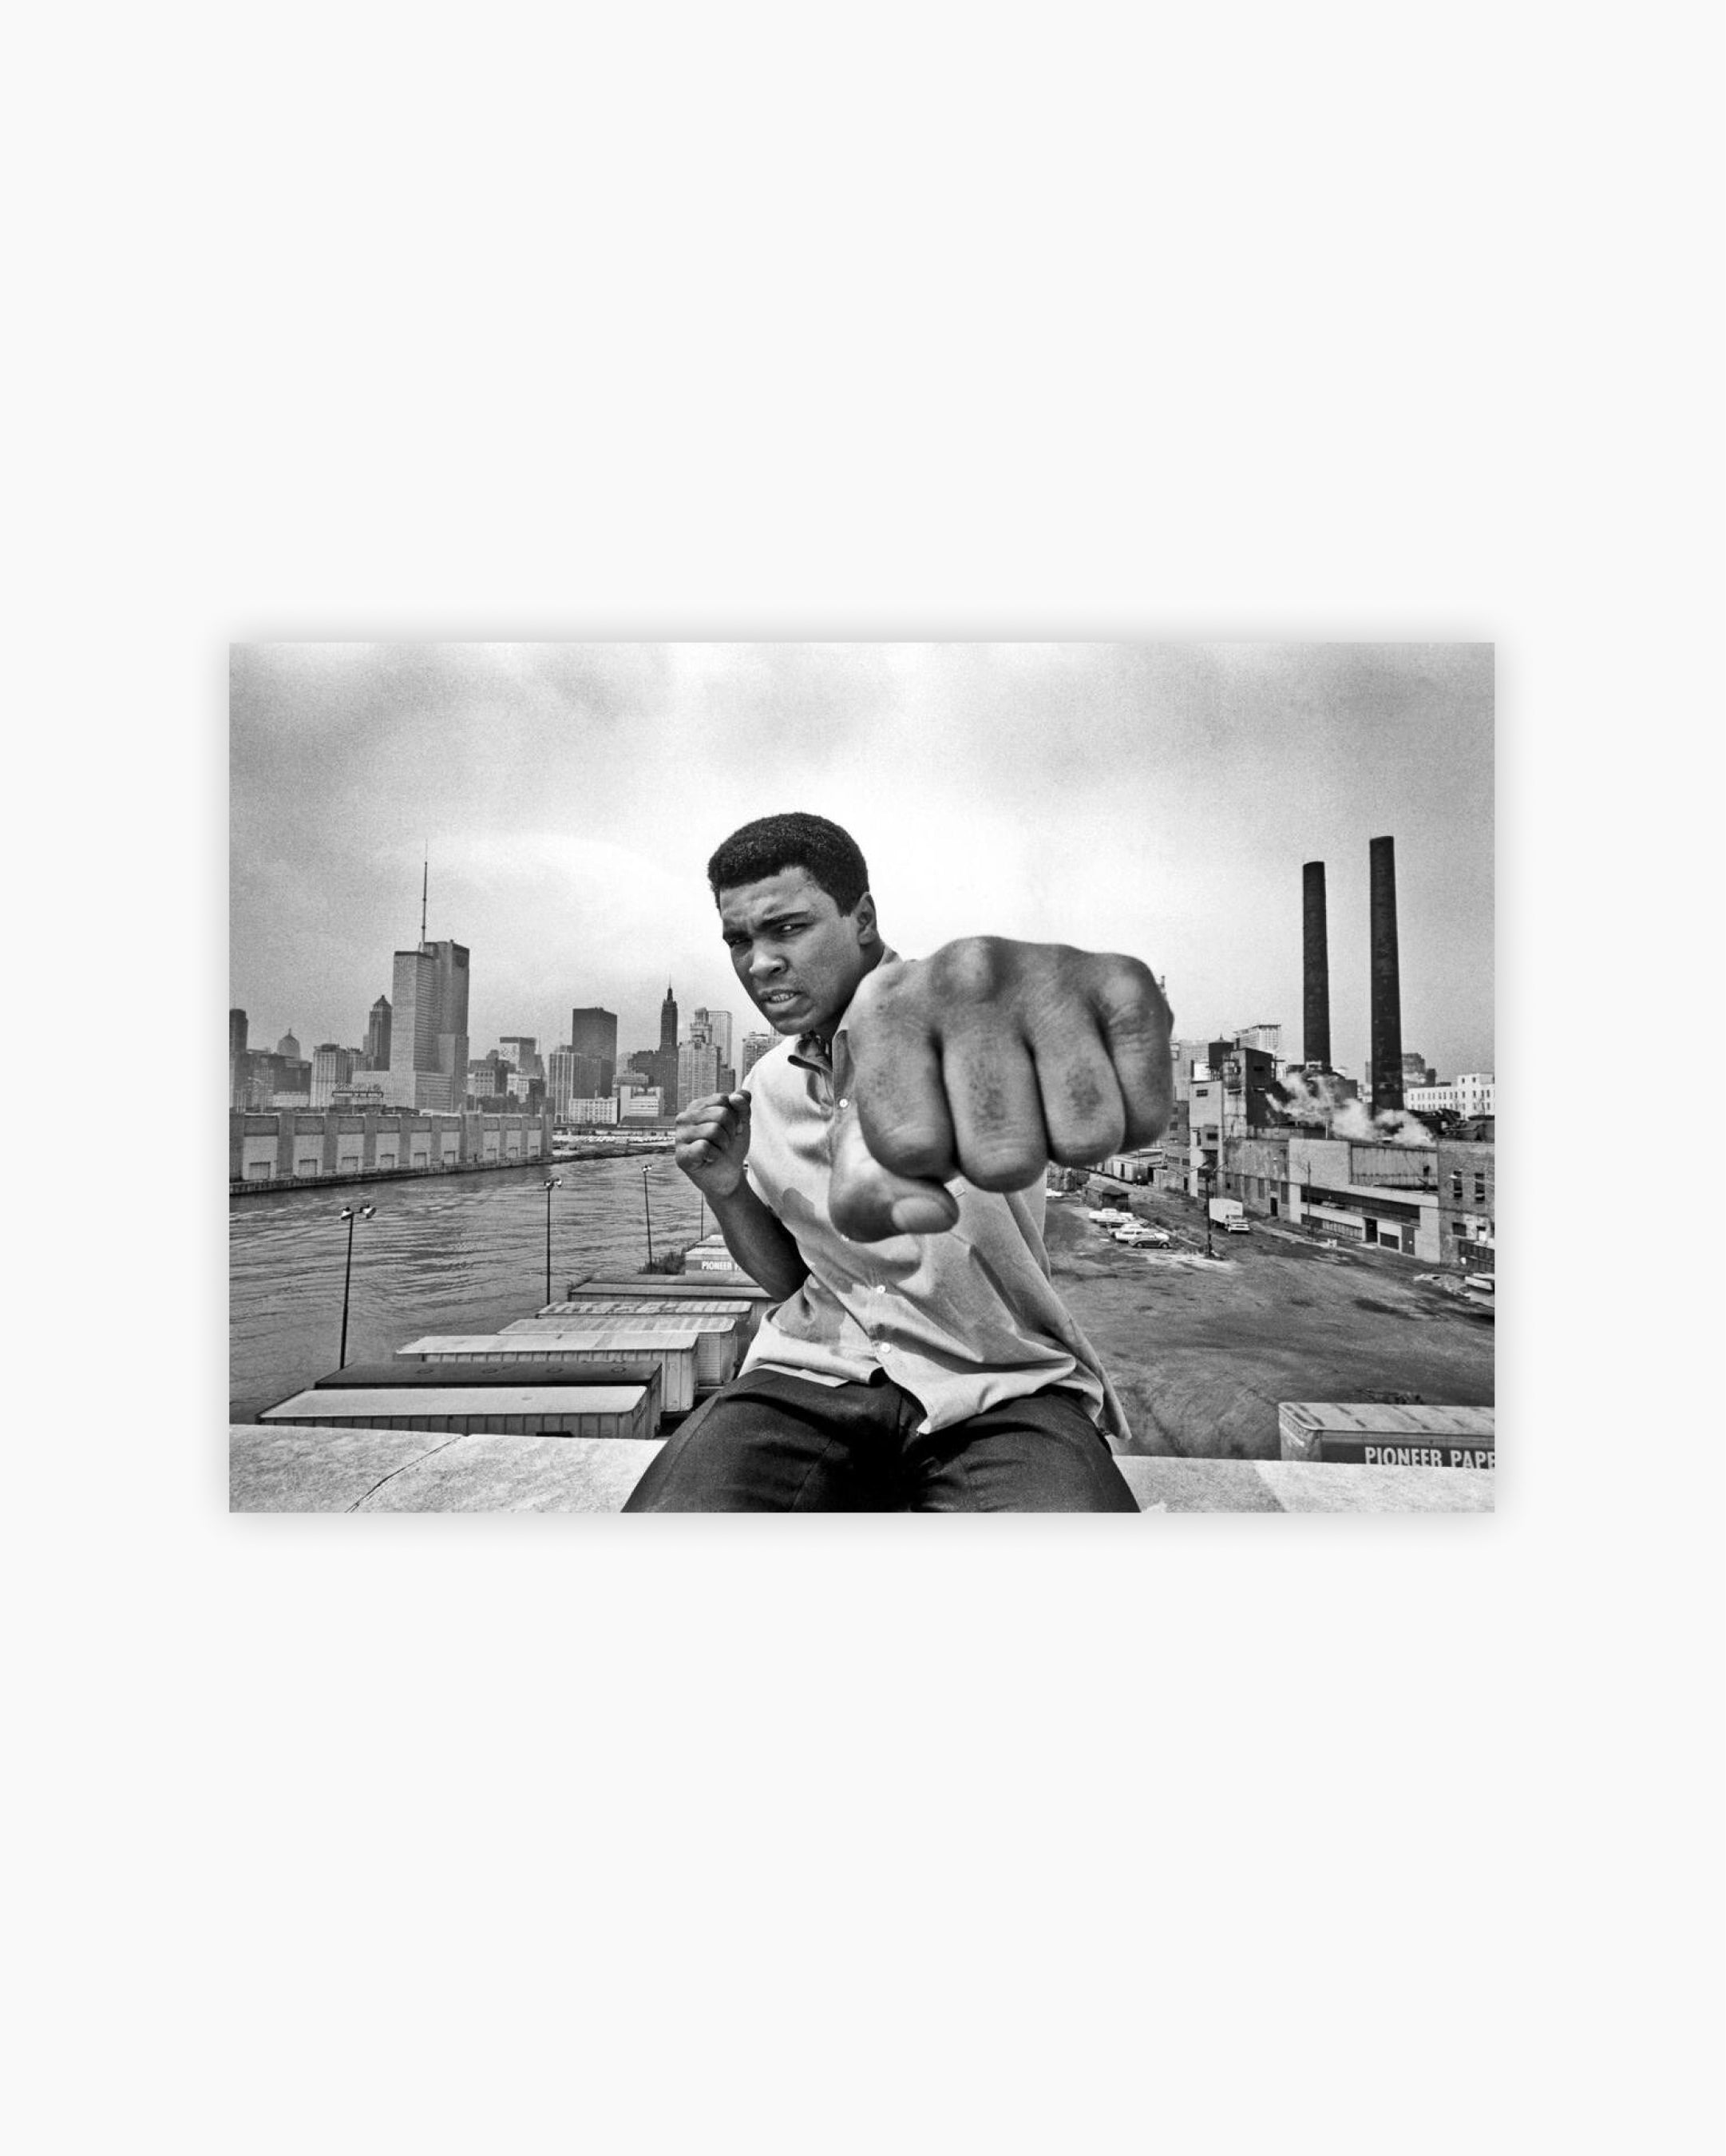 Muhammad Ali. Chicago river, Illinois, 1966